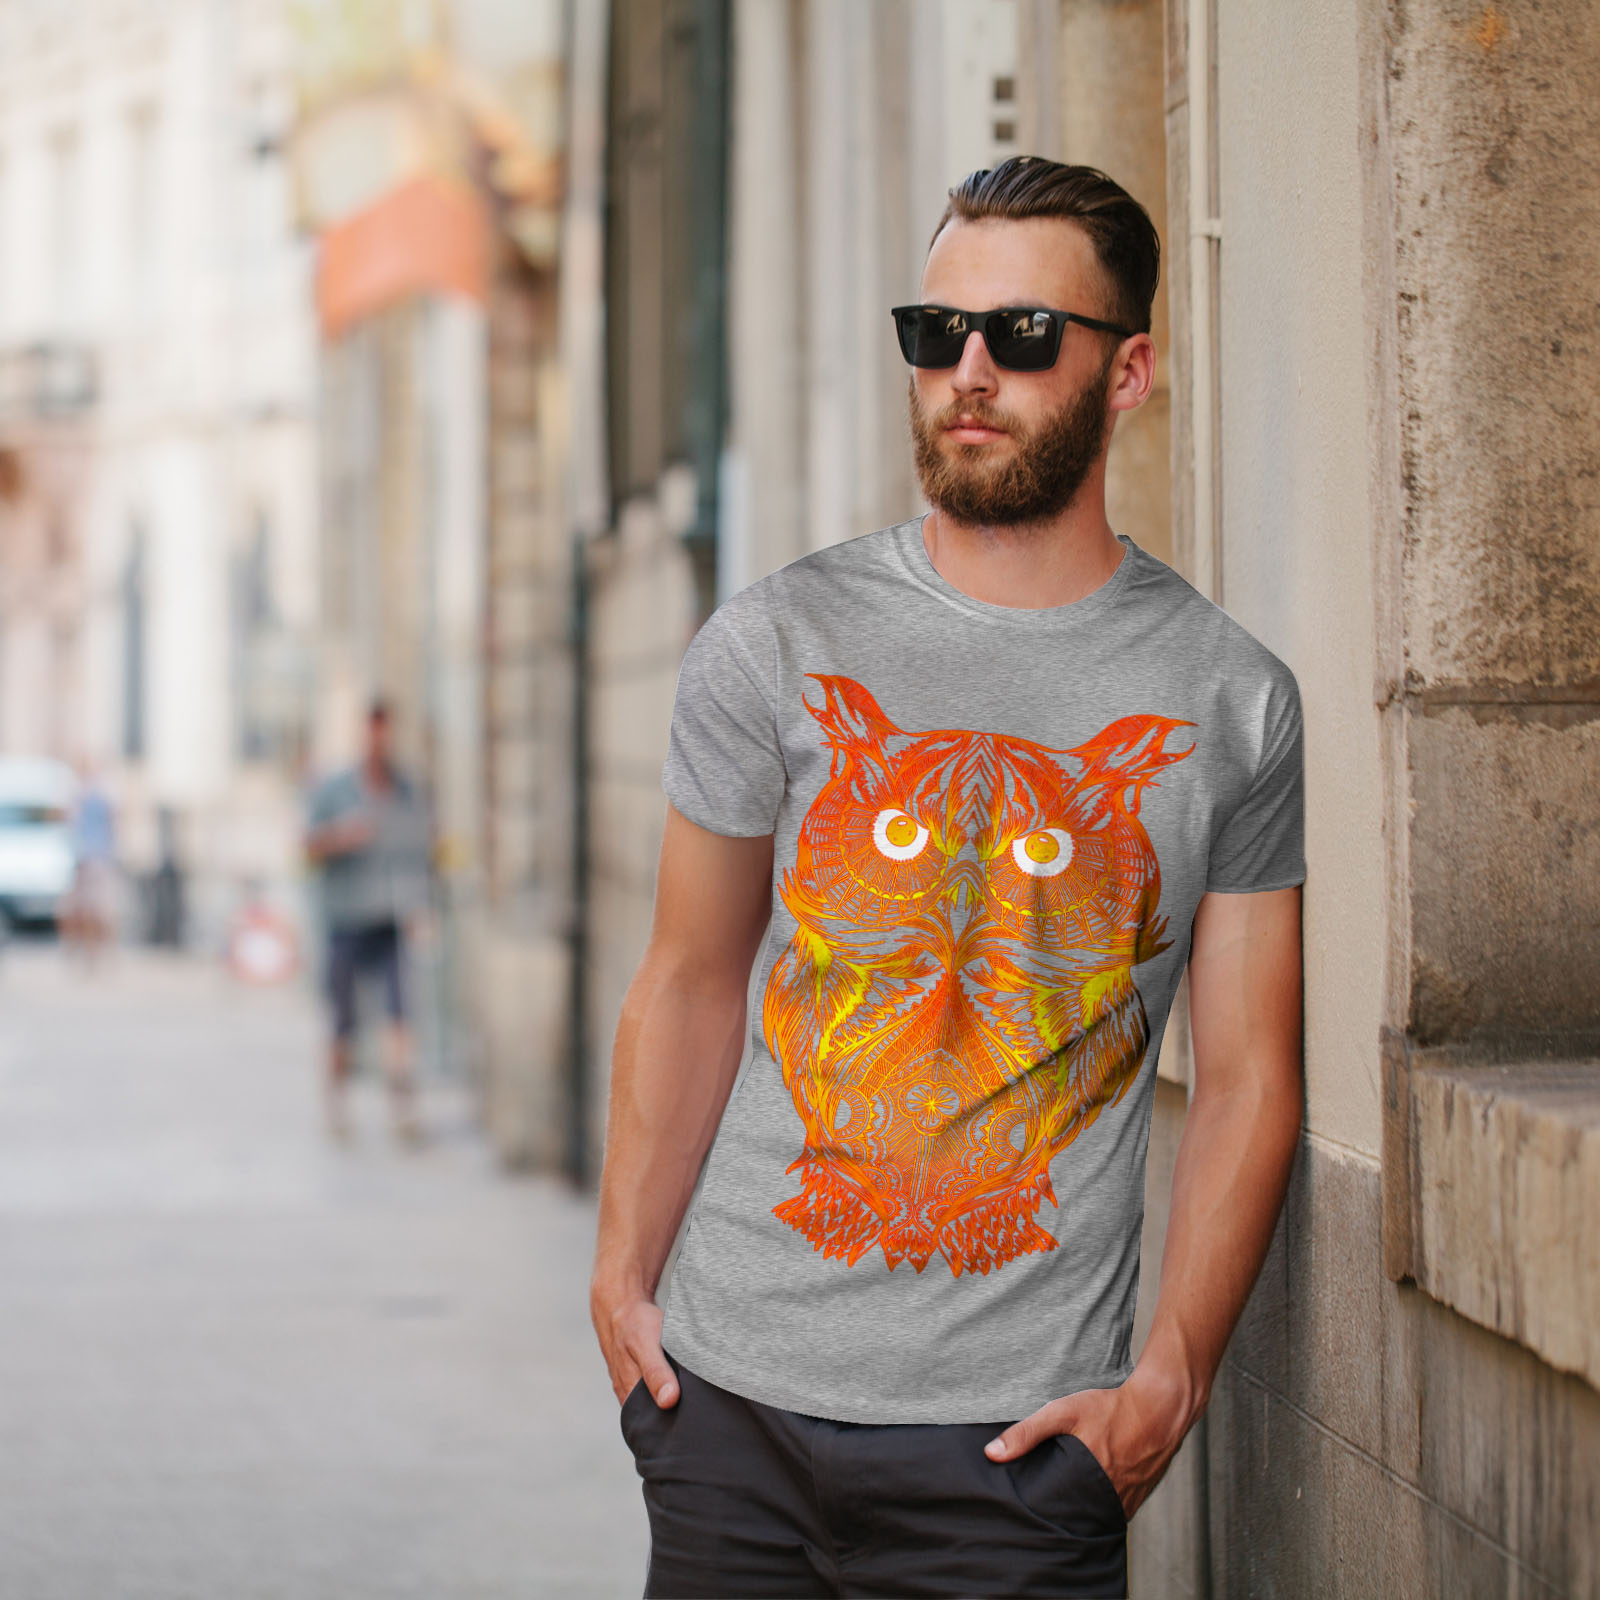 thumbnail 17  - Wellcoda Night Owl On Fire Mens T-shirt, Burning Graphic Design Printed Tee